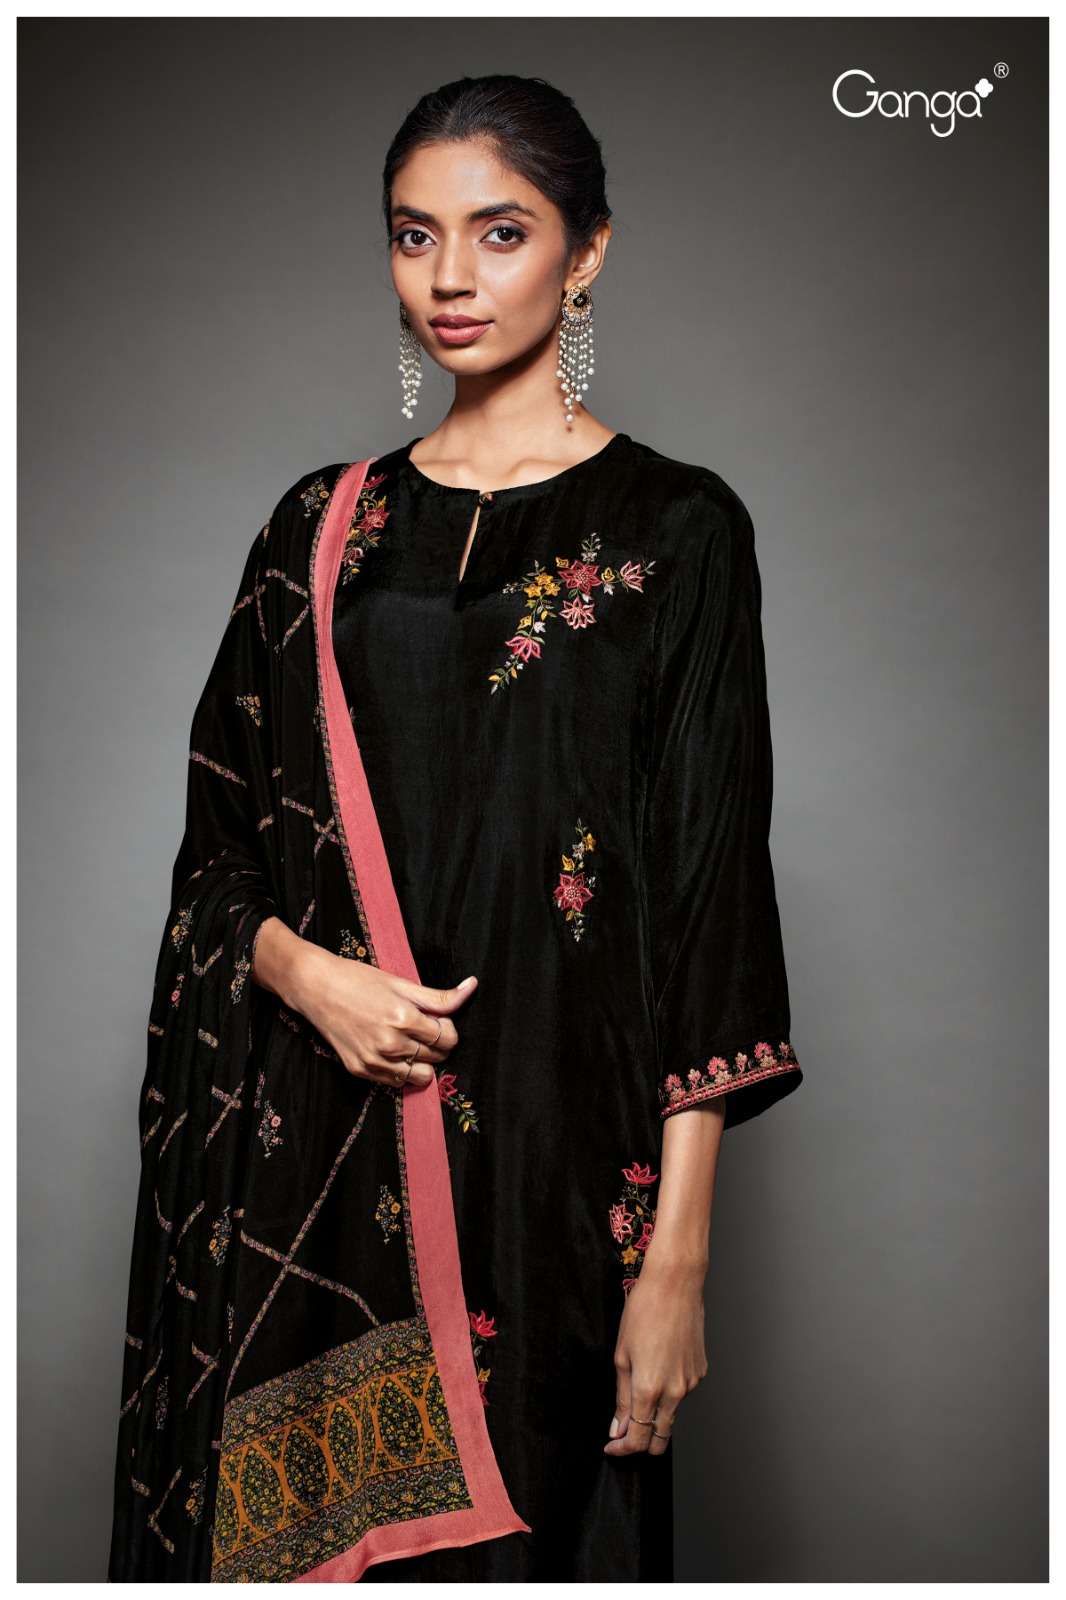 ganga vinaya 1629 series stylish designer salwar suits catalogue online market surat